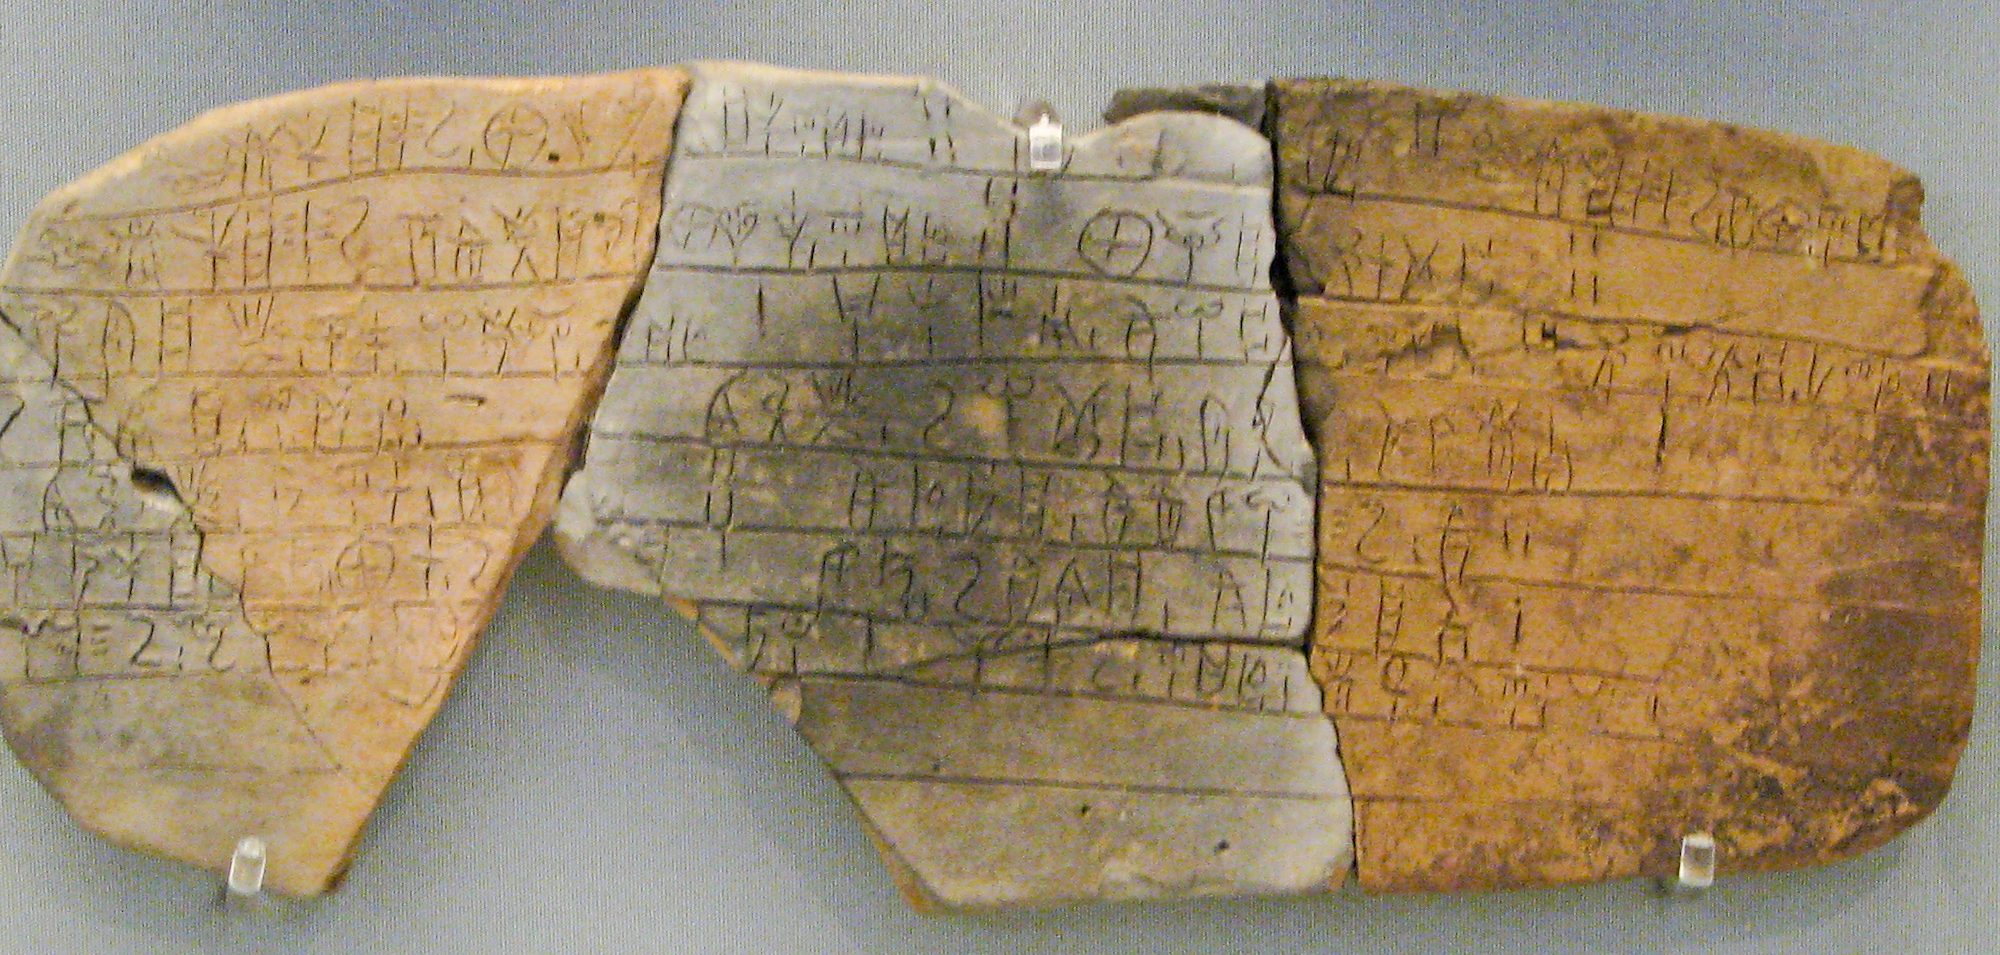 A sample of Linear B script, the earliest Greek writing, 1450 BC